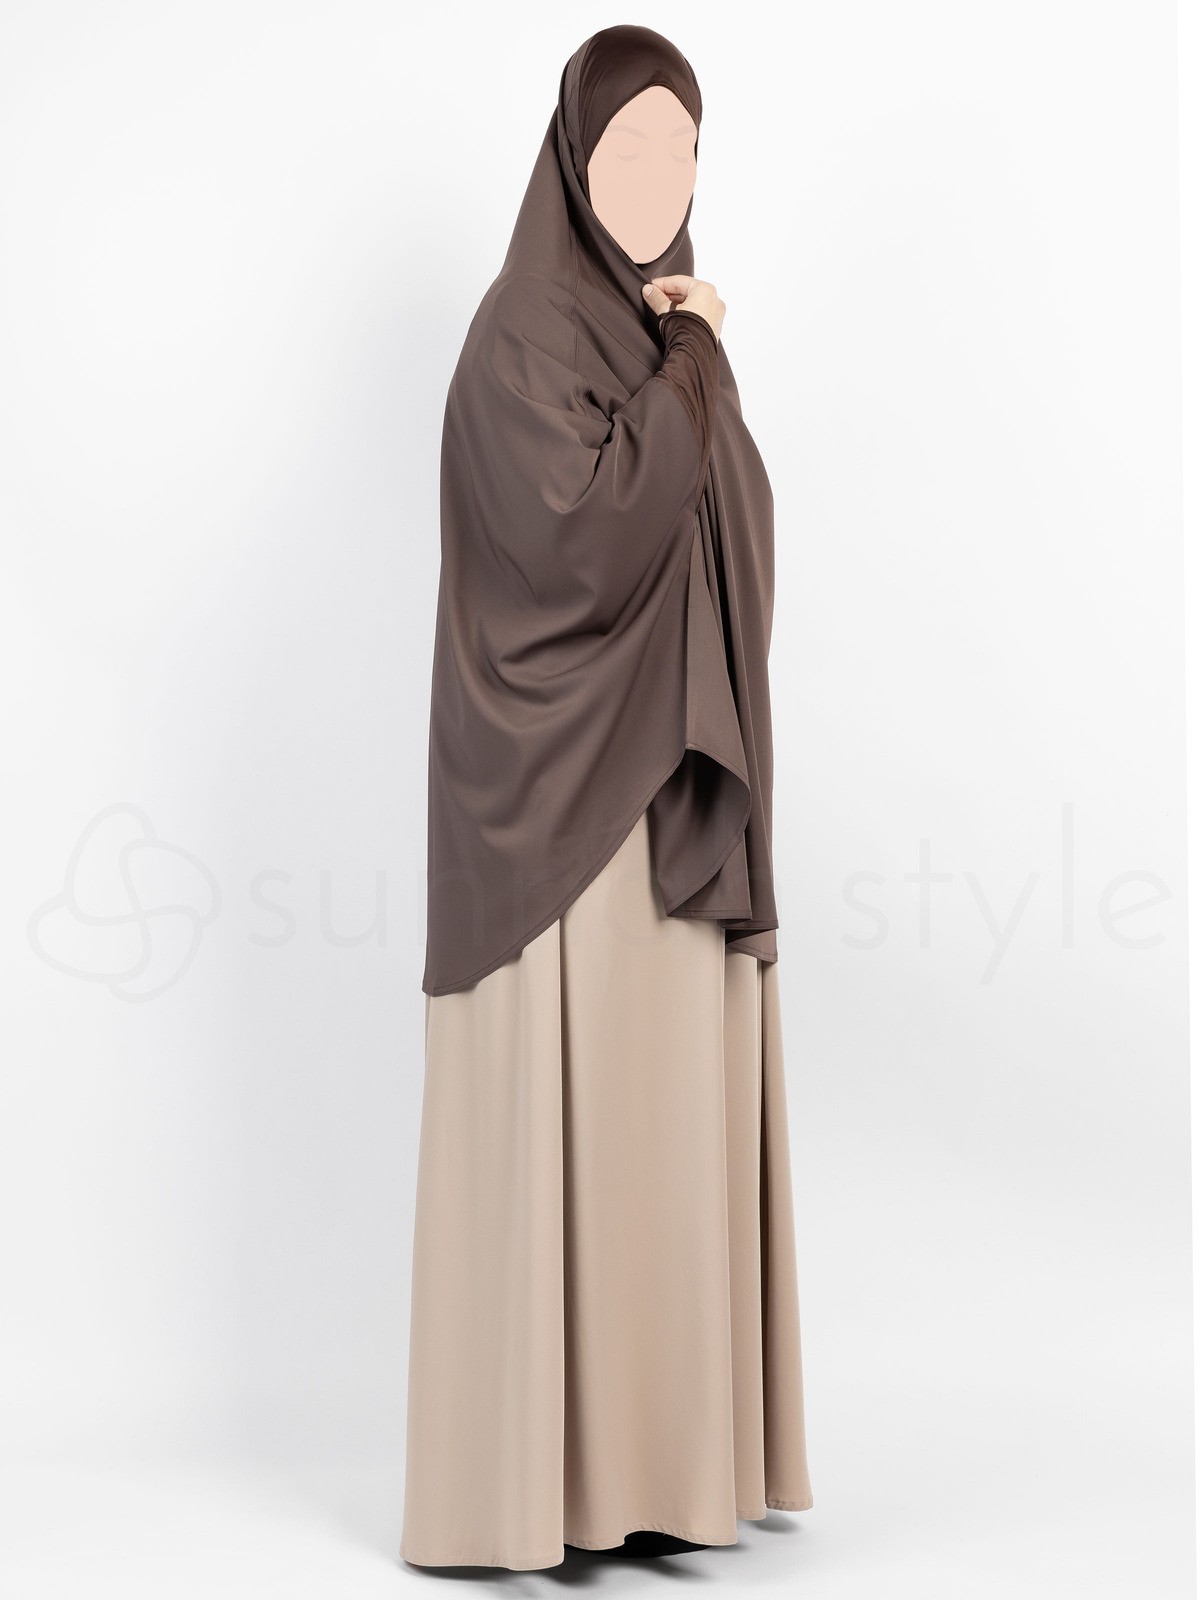 Sunnah Style - Signature Jilbab Top - Thigh Length (Mink)